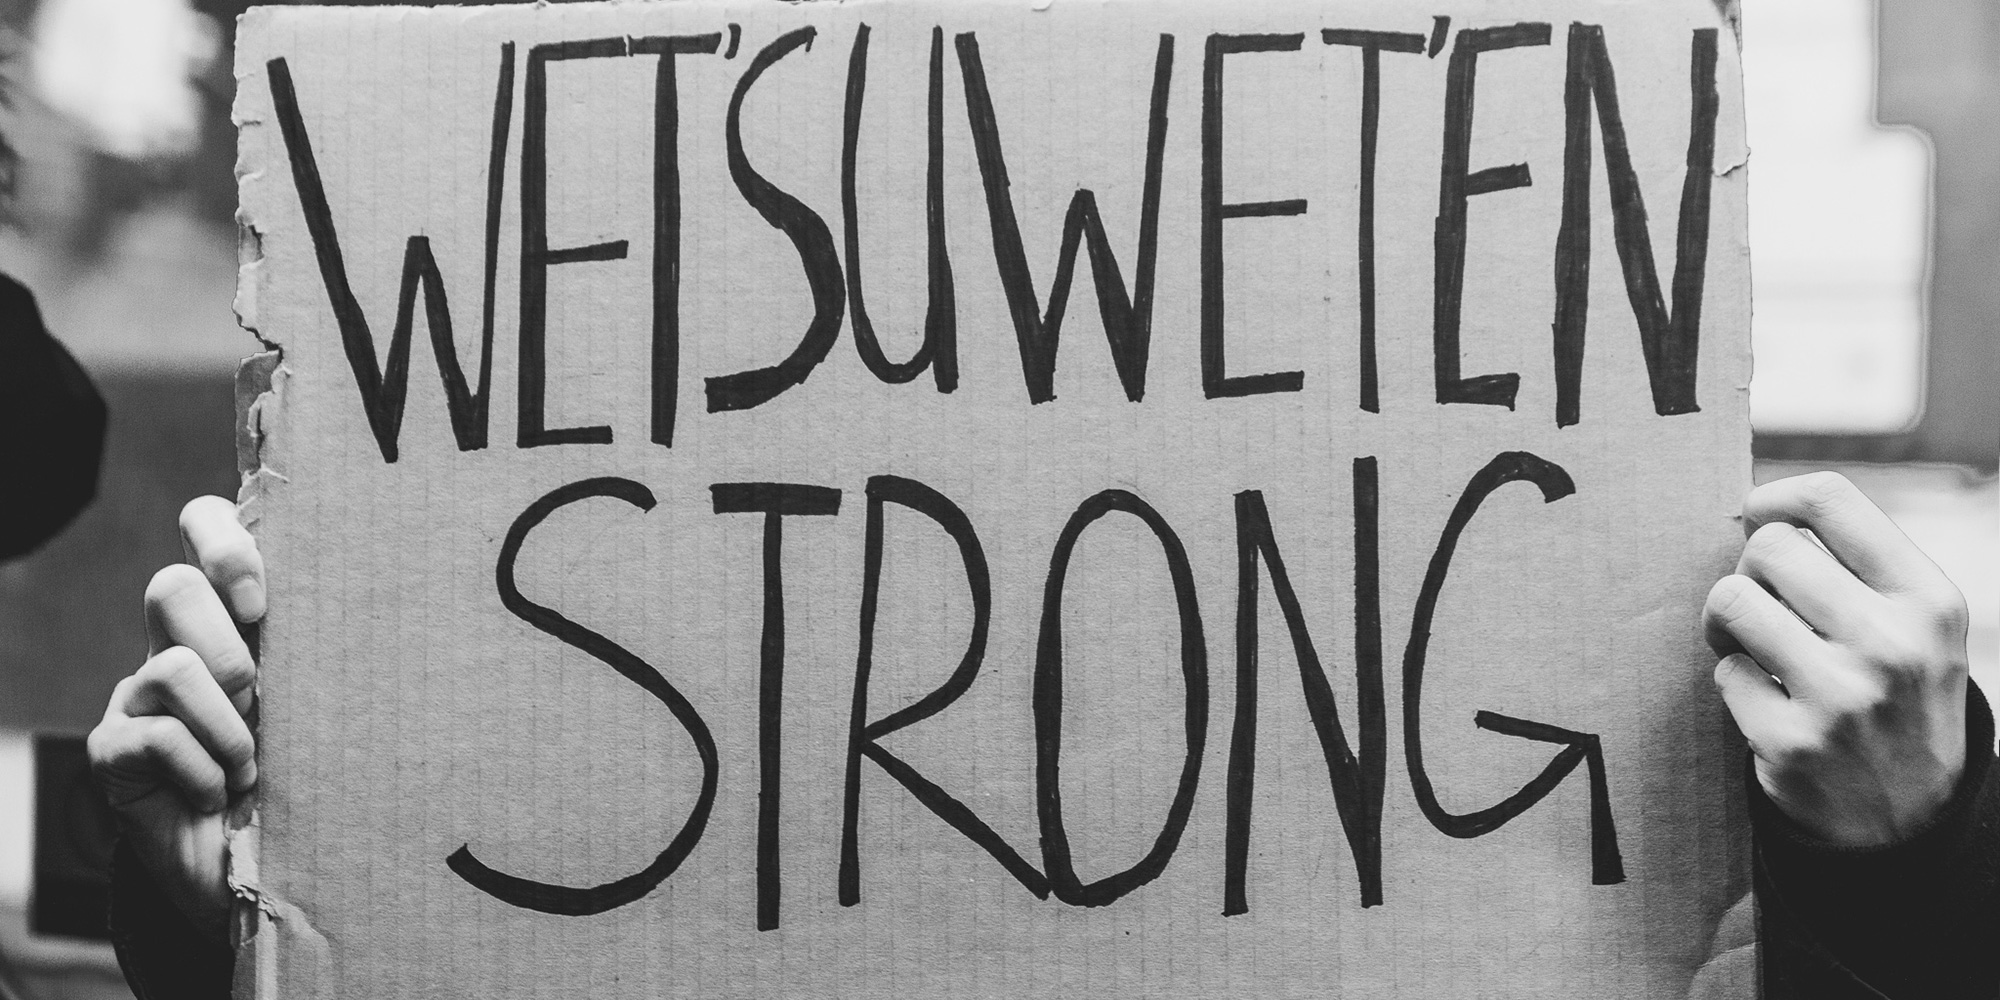 Sign from Wet'suwet'en protests. Photo: Jason Hargove, Flickr